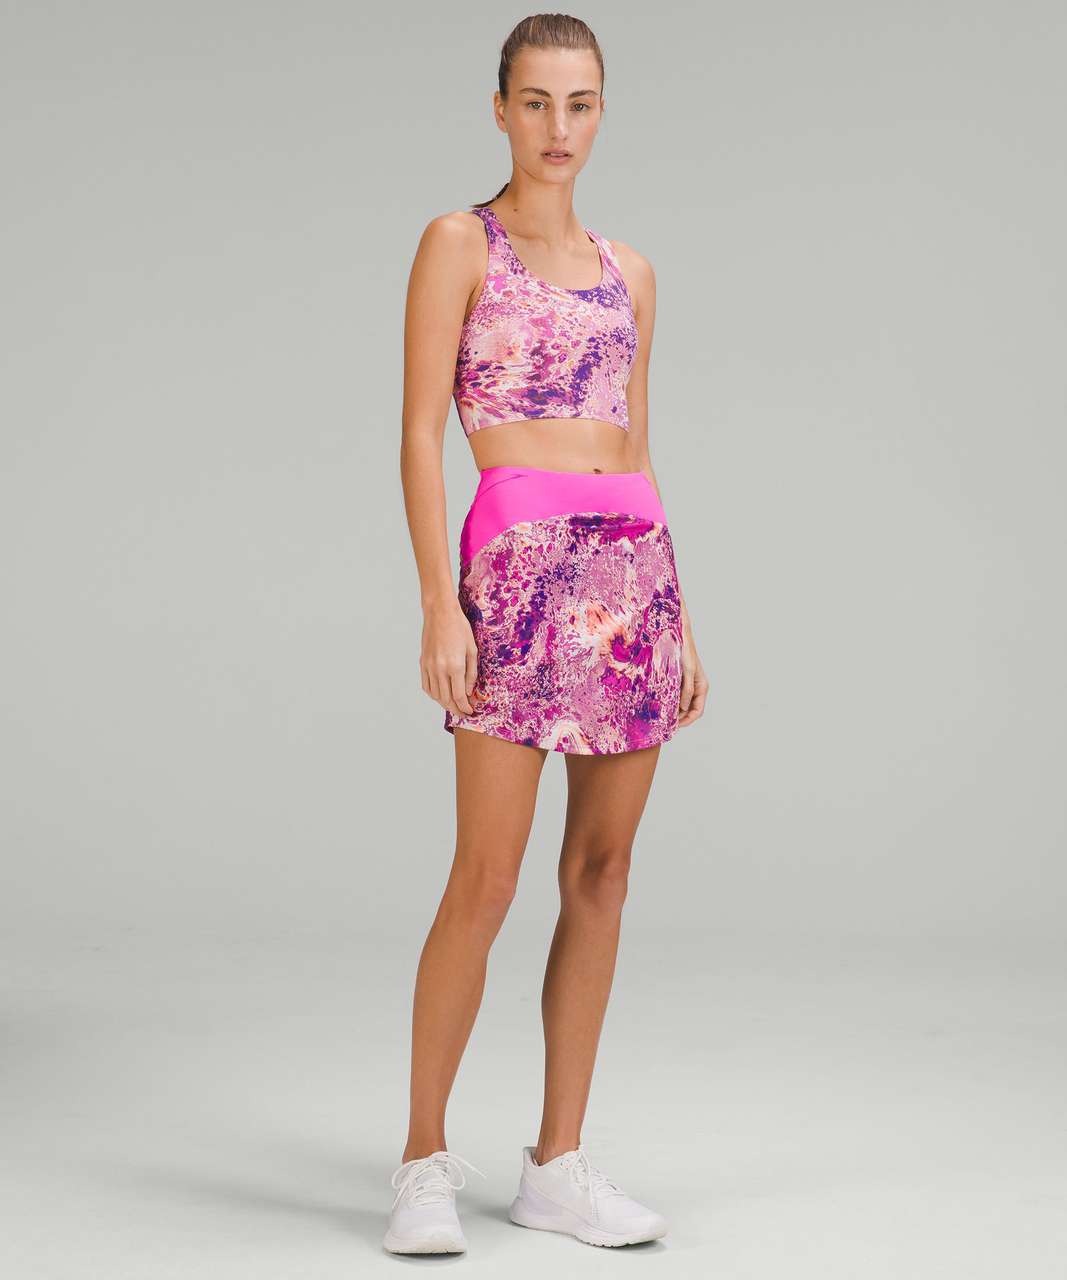 Lululemon Limited Edition Swift High-Rise Long Running Skirt - Anticipation Pink Multi / Pow Pink